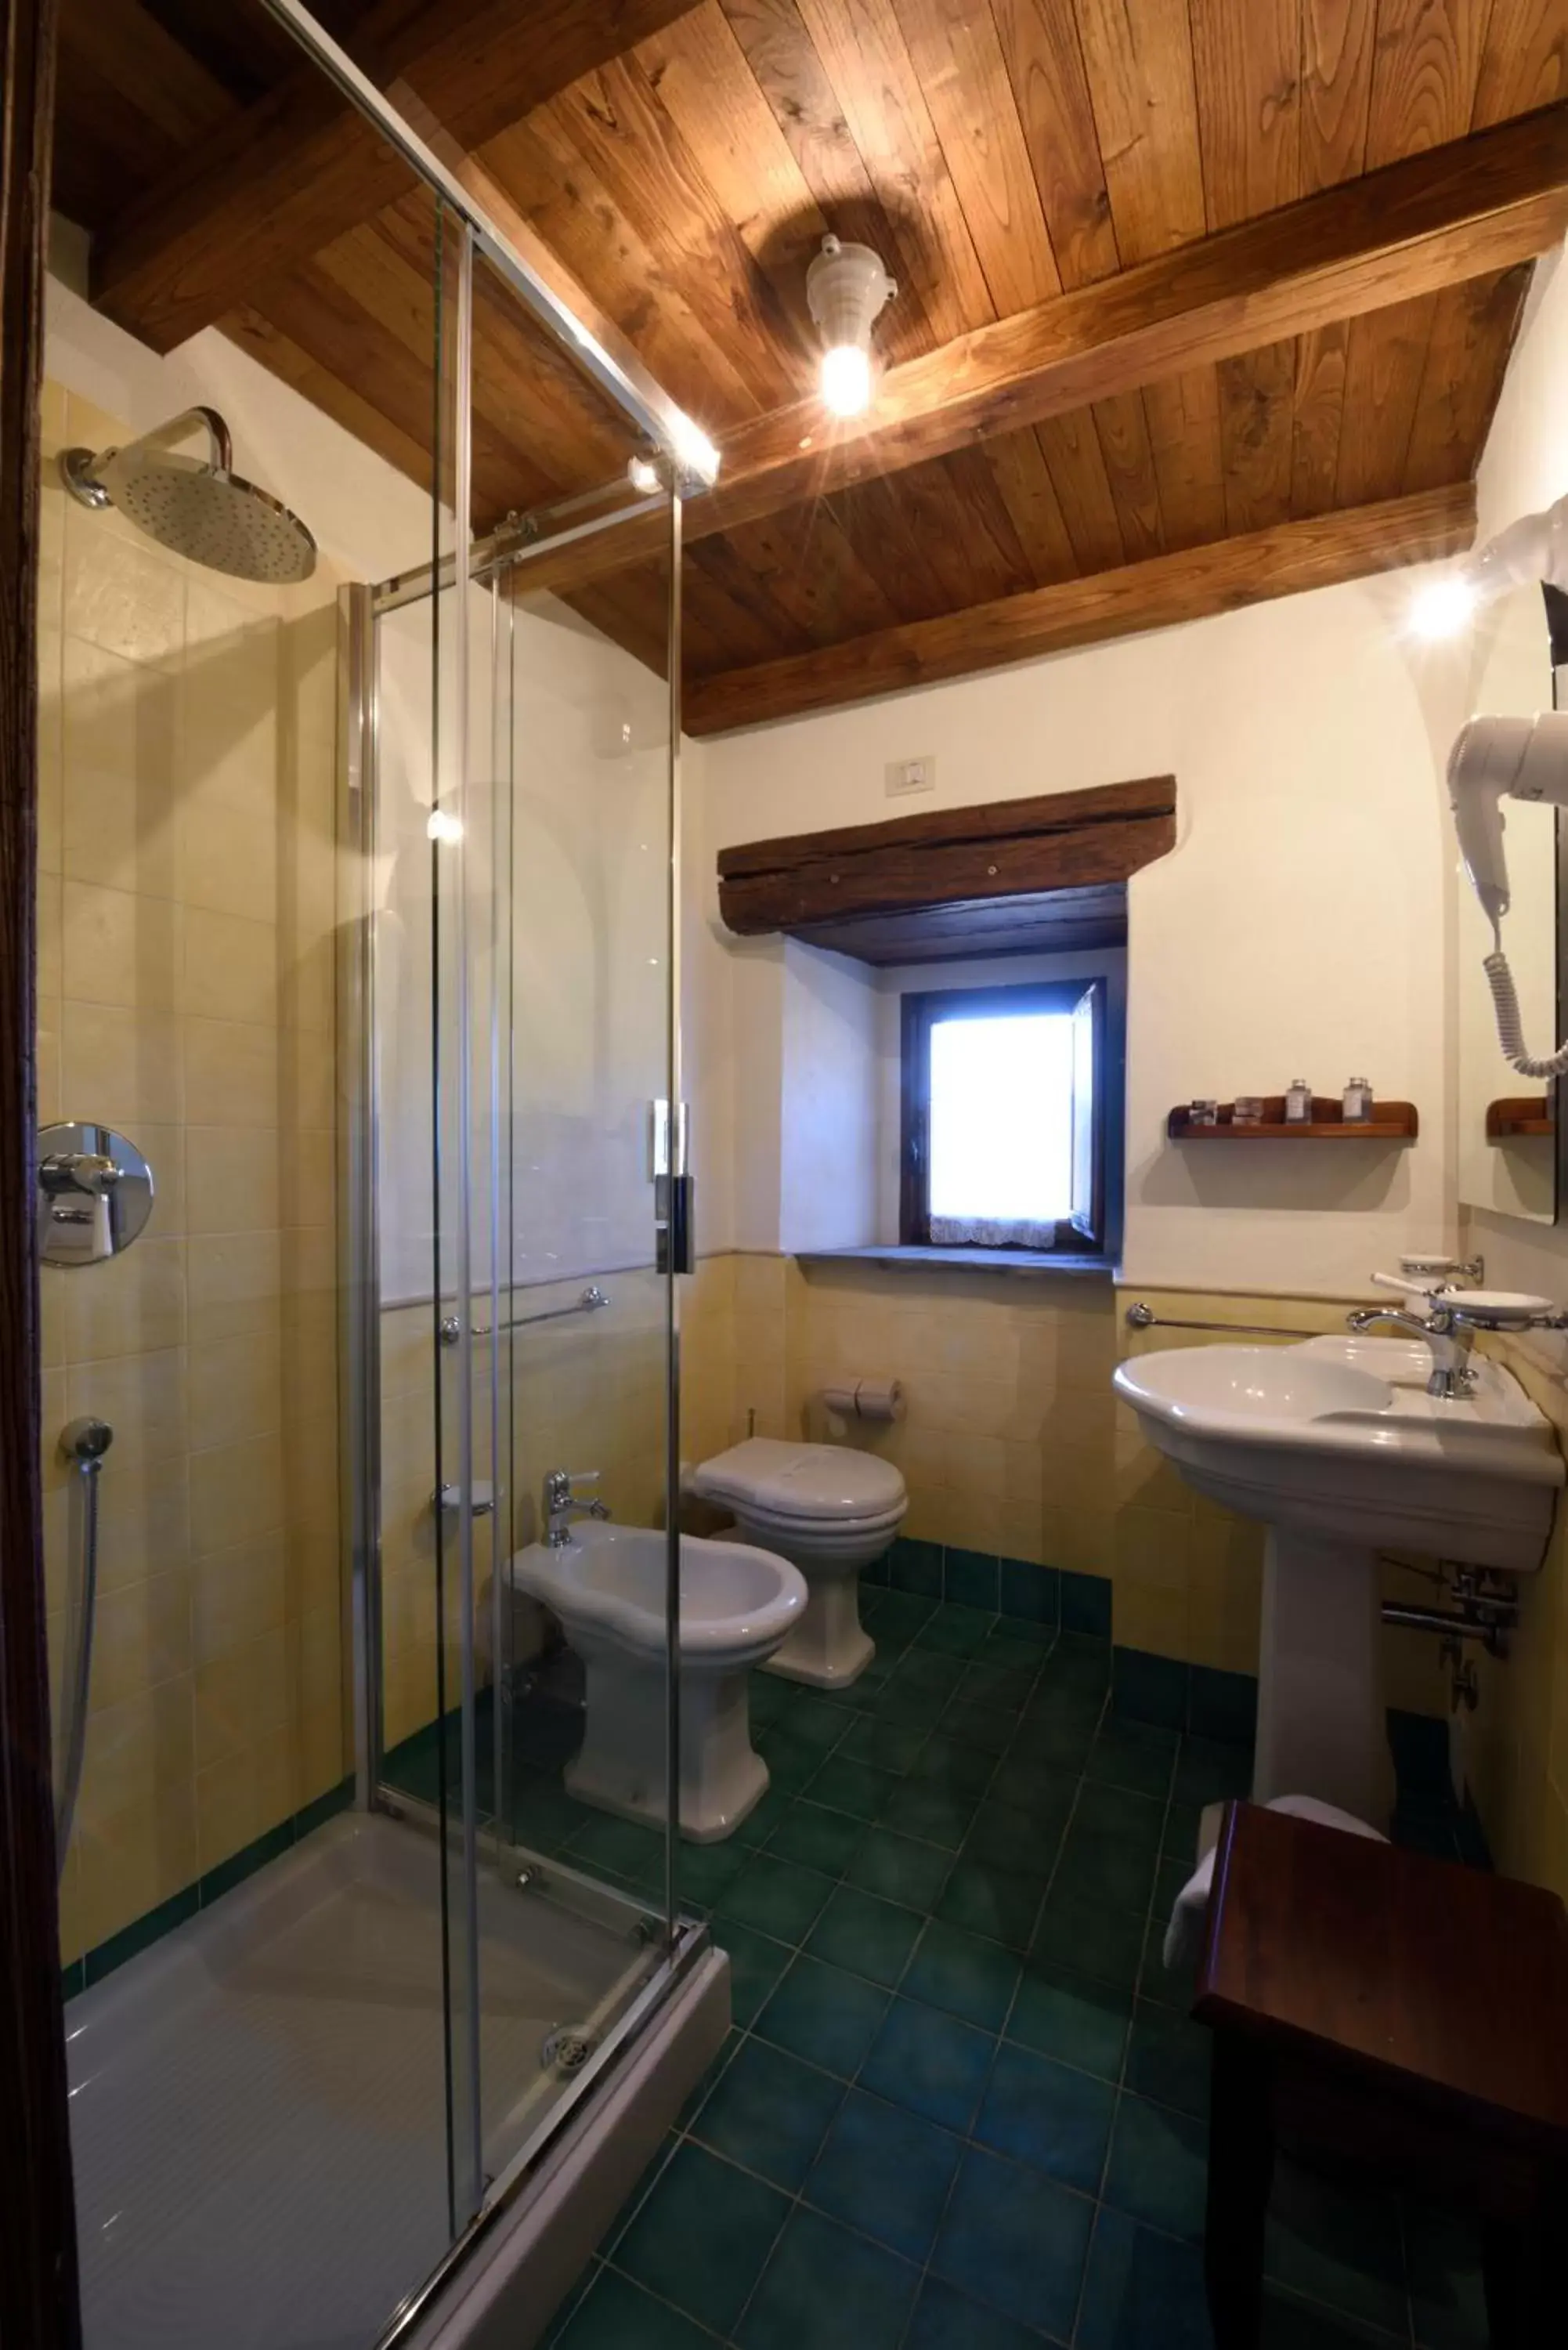 Shower, Bathroom in Borgotufi Albergo Diffuso